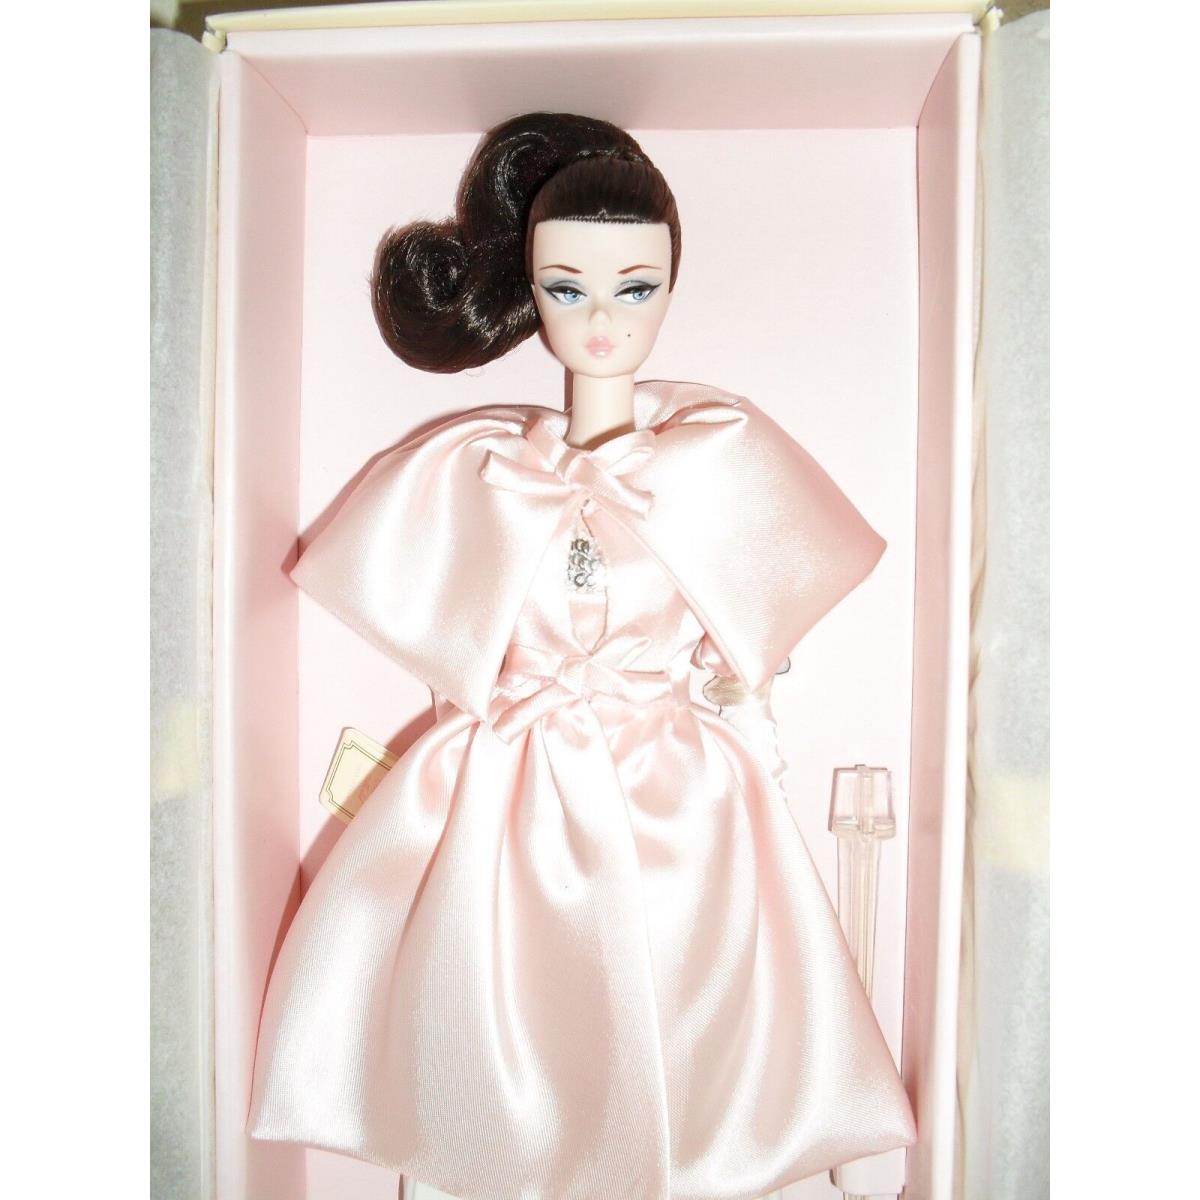 Blush Beauty Silkstone Barbie Nrfb with Shipper Fan Club Exclusive 4400